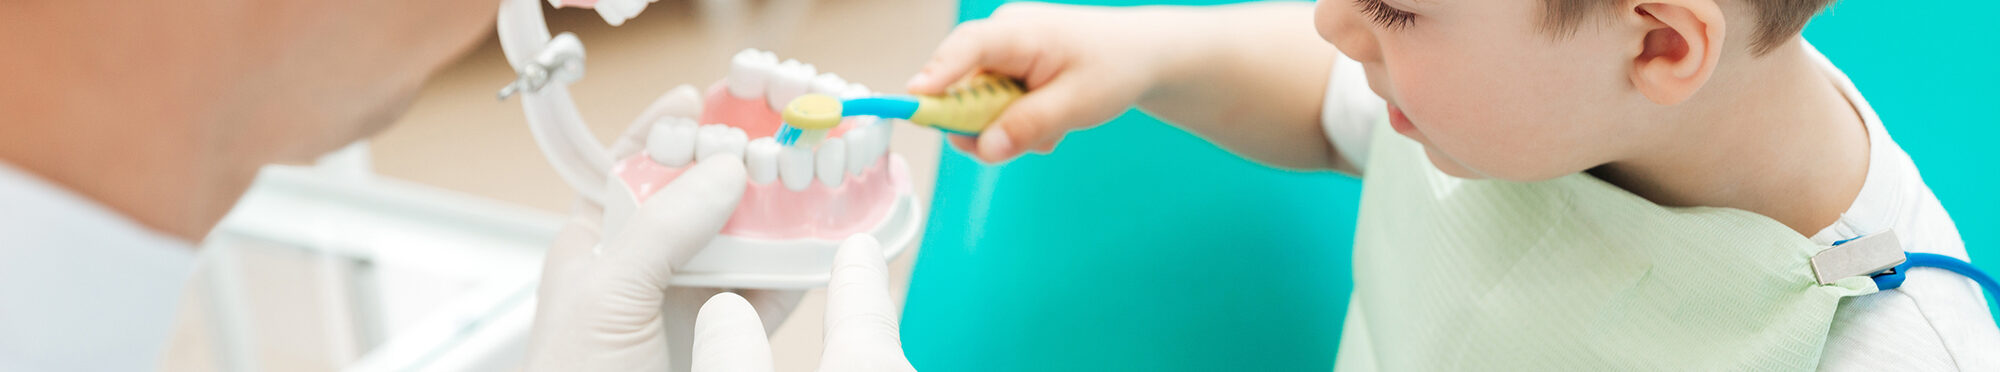 Motivbild Zahngesundheit Kinder [Foto: ©Drobot Dean - stock.adobe.com]